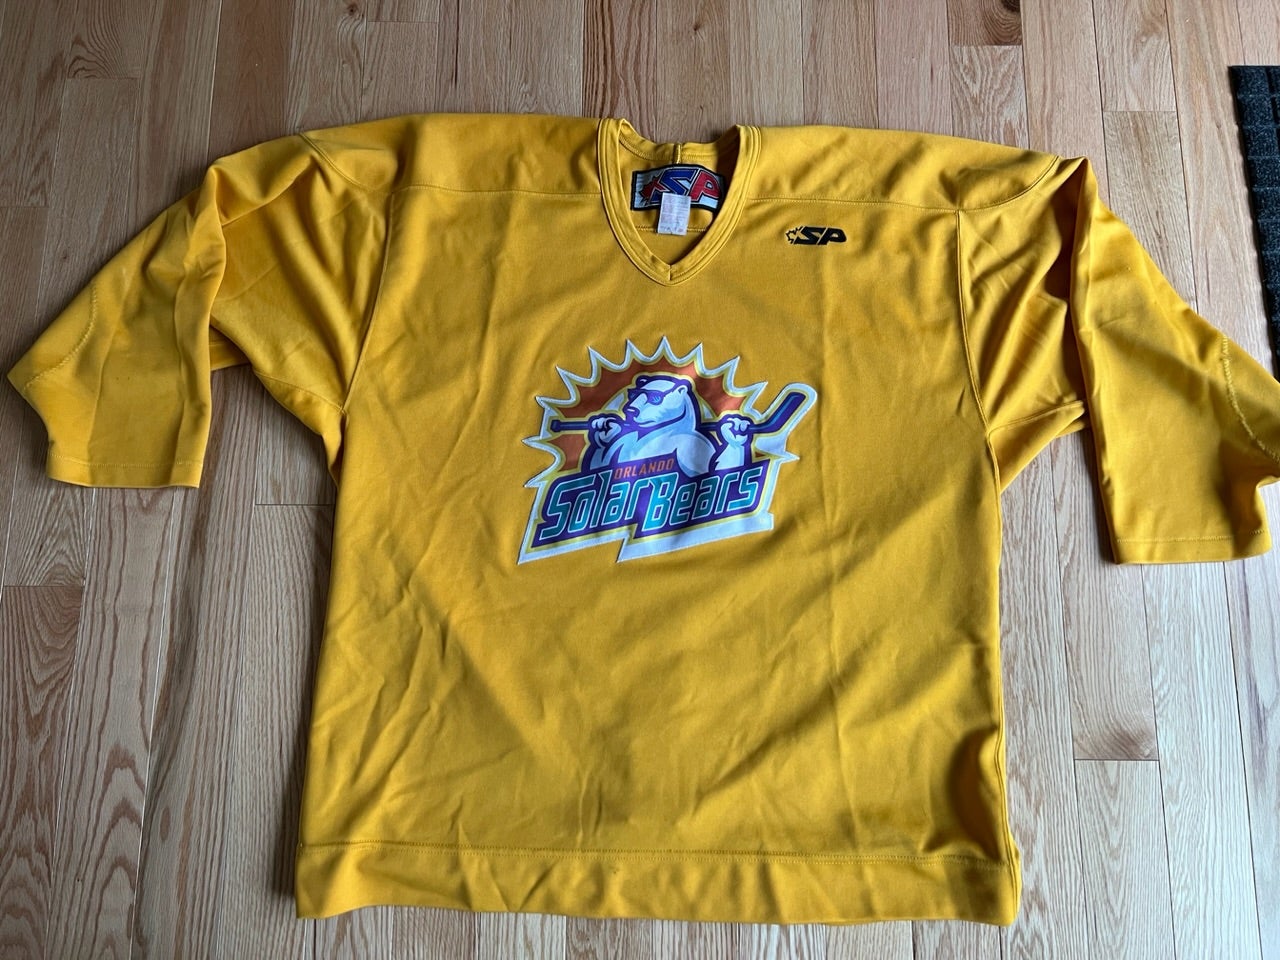 Solar Bears unveil new jersey